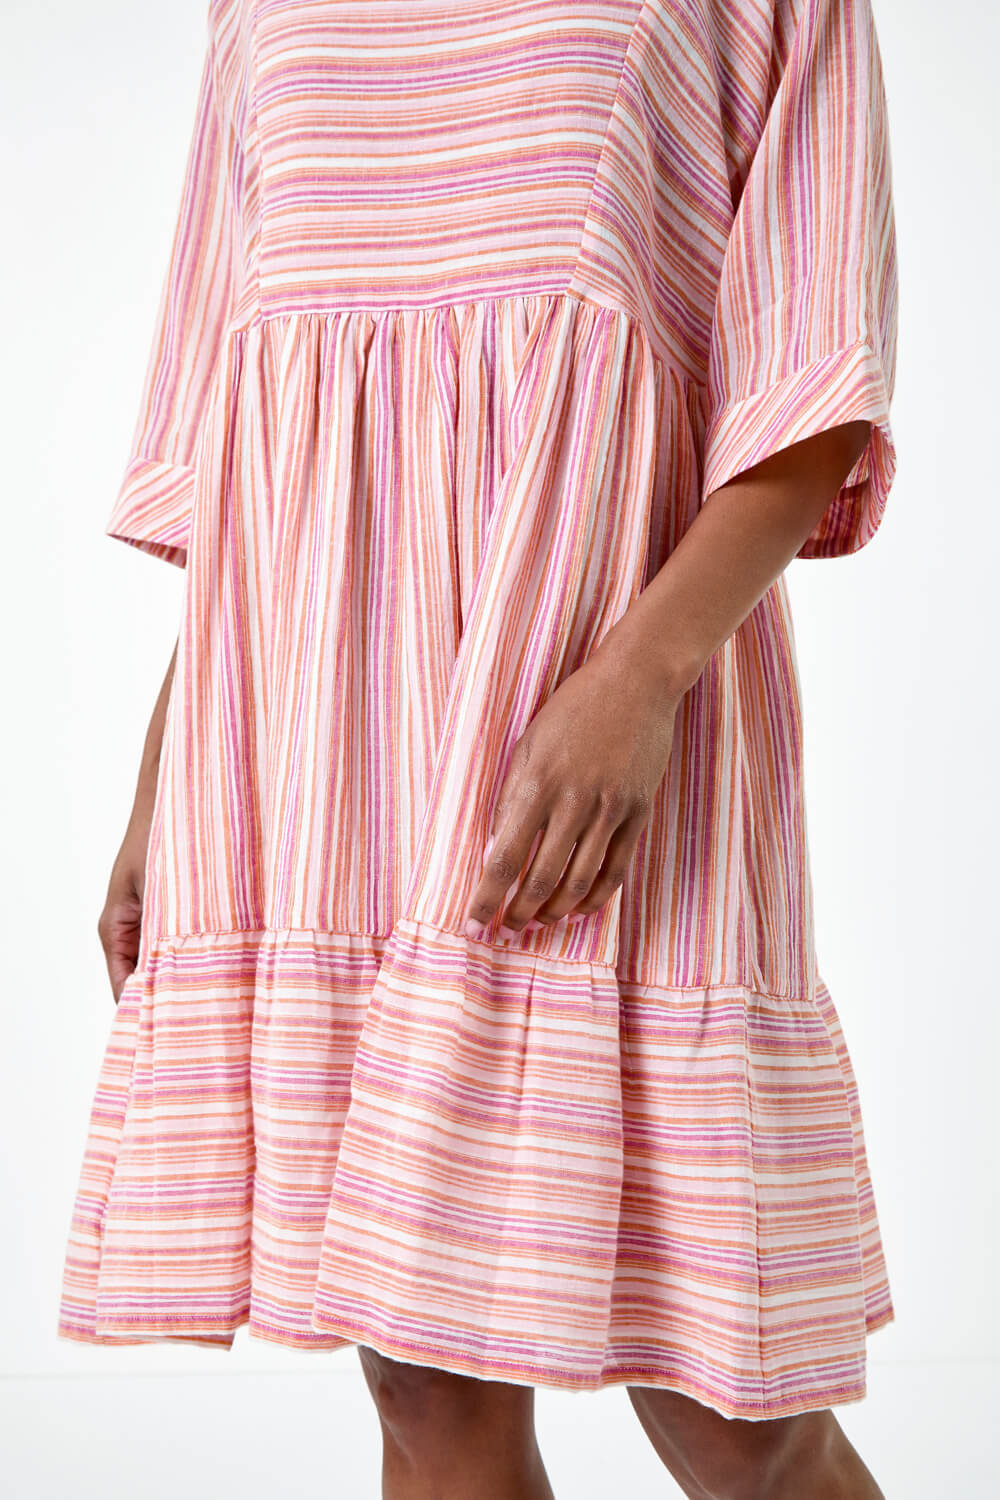 PINK Cotton Stripe Print Smock Dress, Image 5 of 5